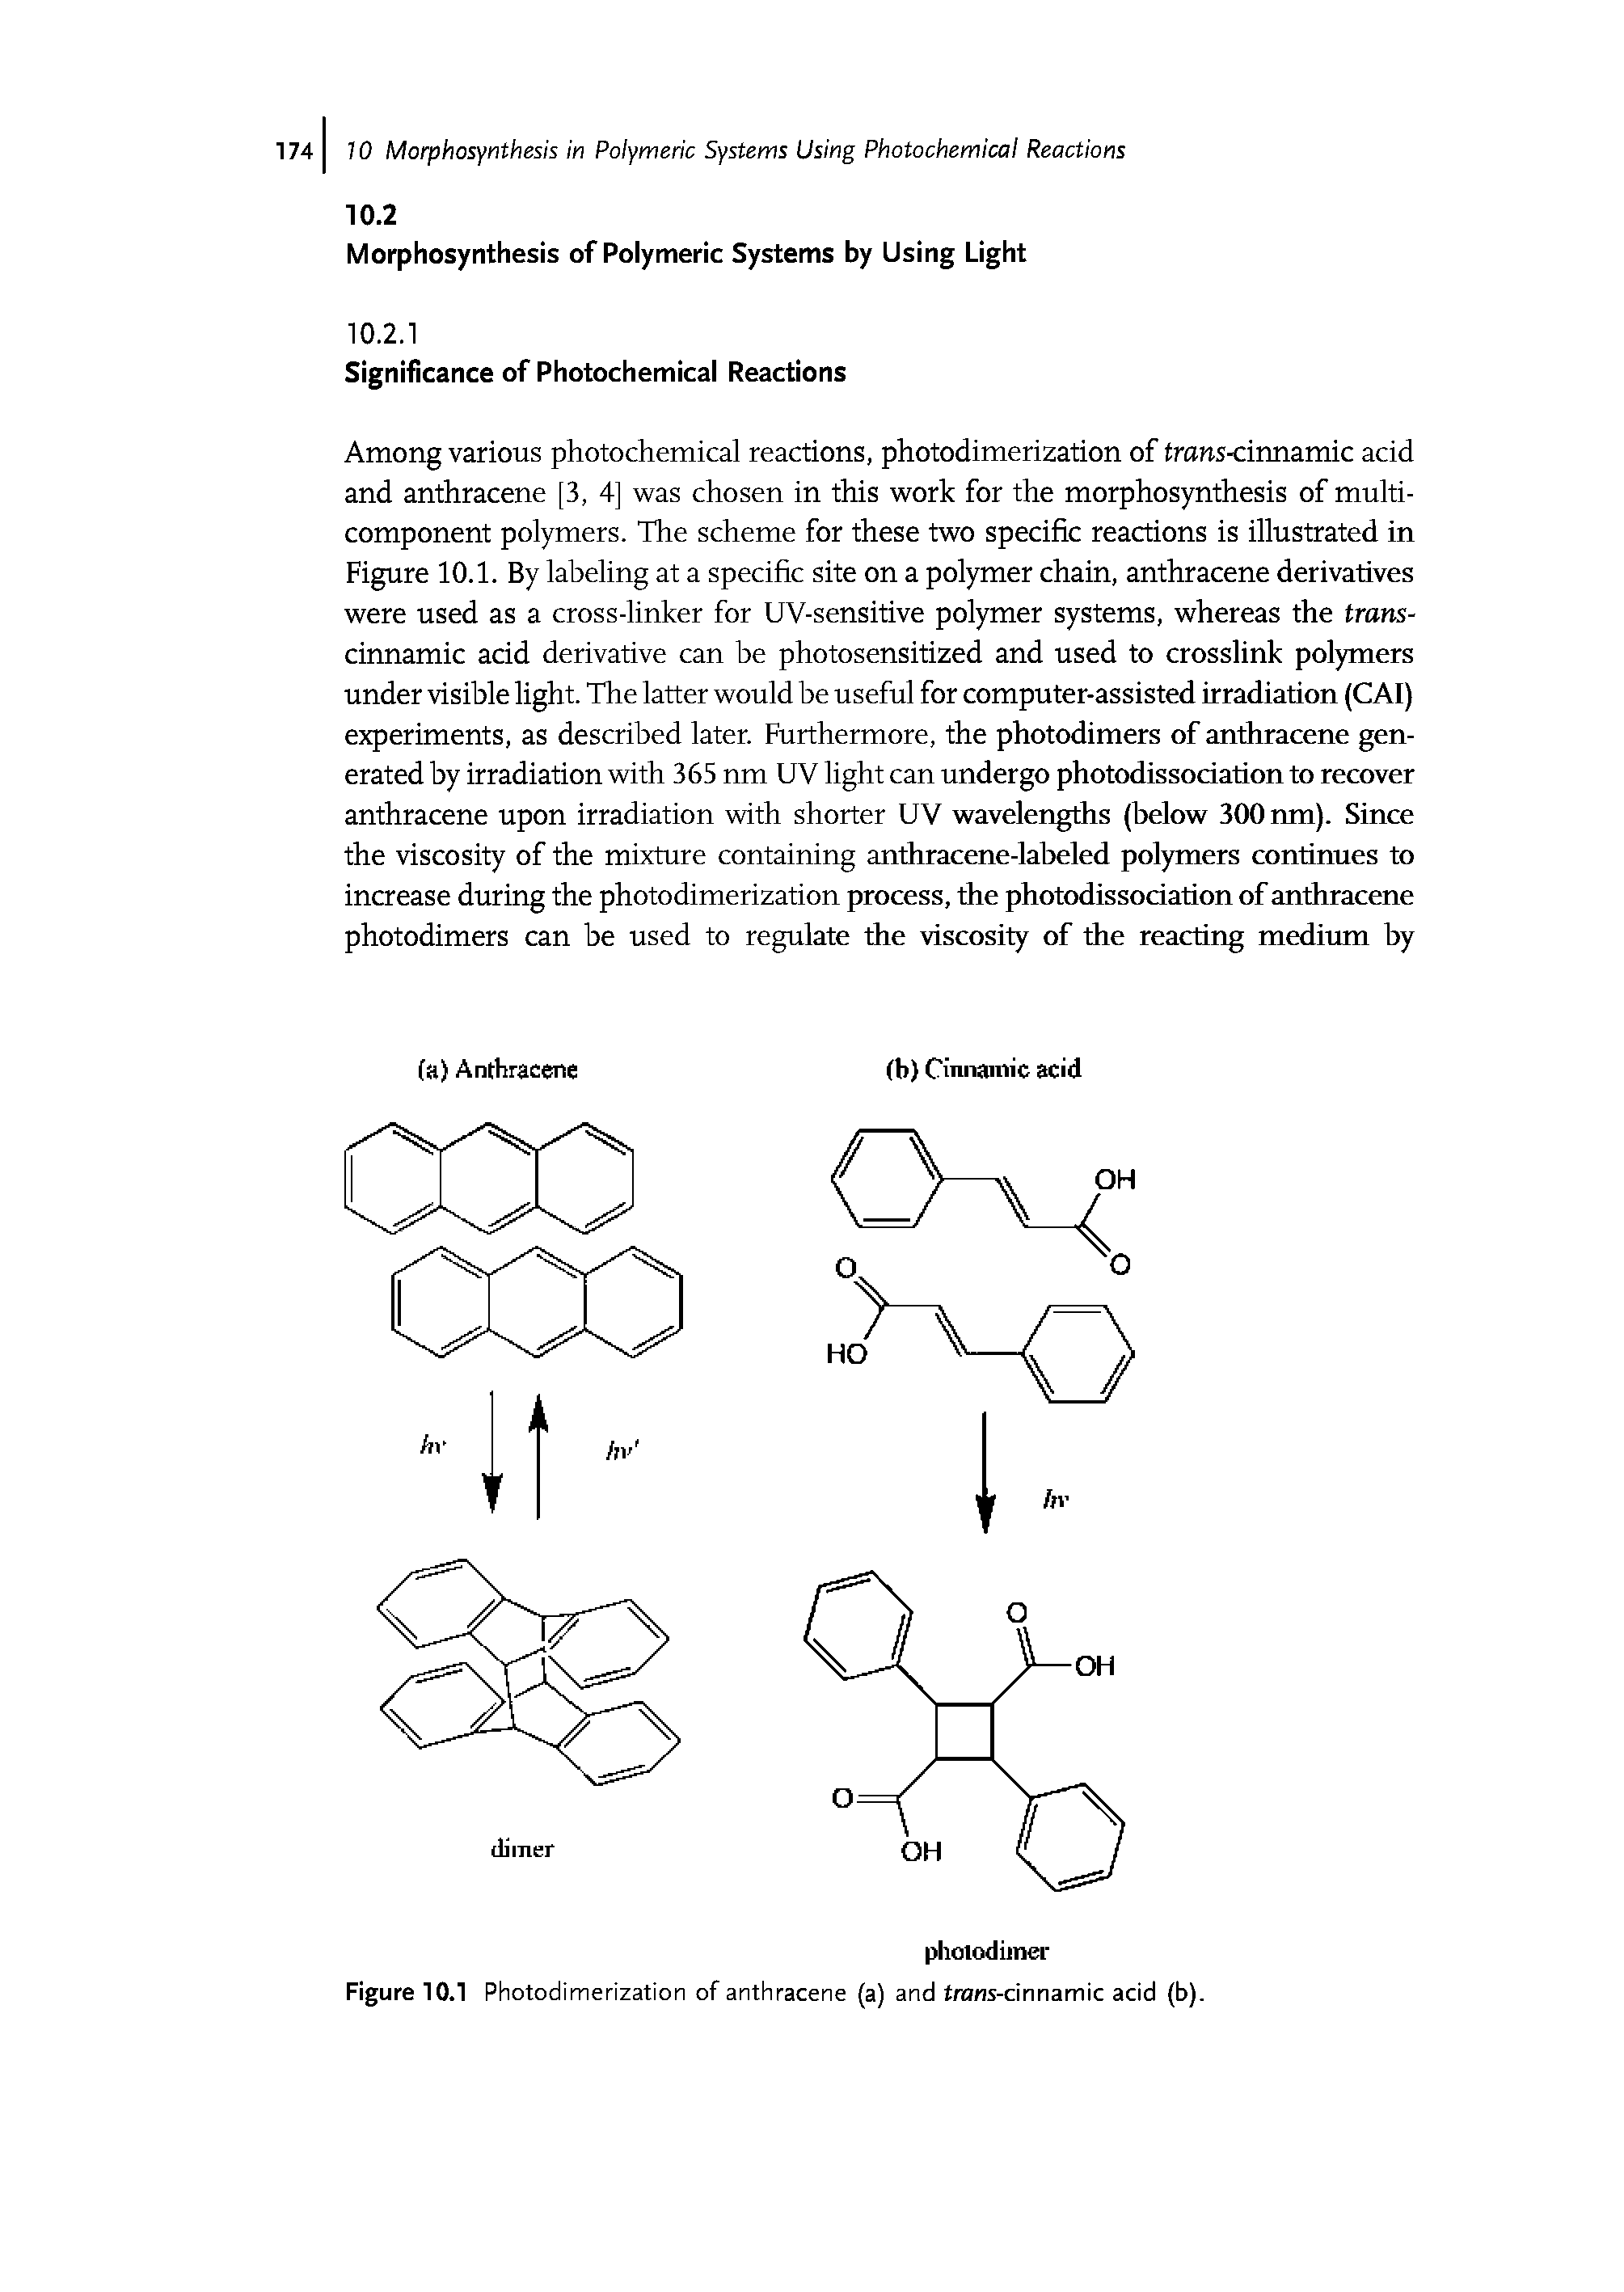 Figure 10.1 Photodimerization of anthracene (a) and trans-cinnamic acid (b).